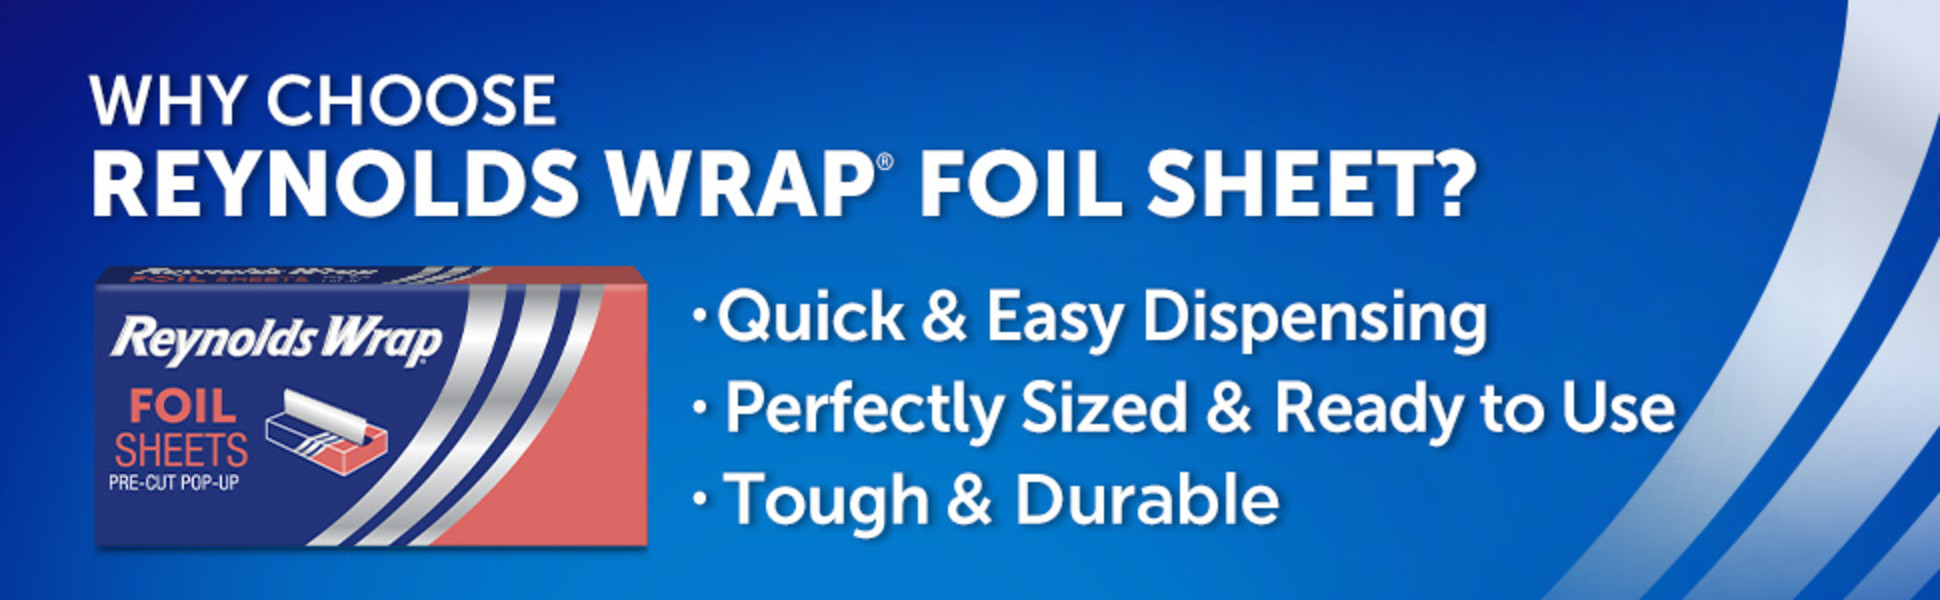 Reynolds Wrappers 25 Pre-Cut Pop Up Foil Sheets (4 Pack)